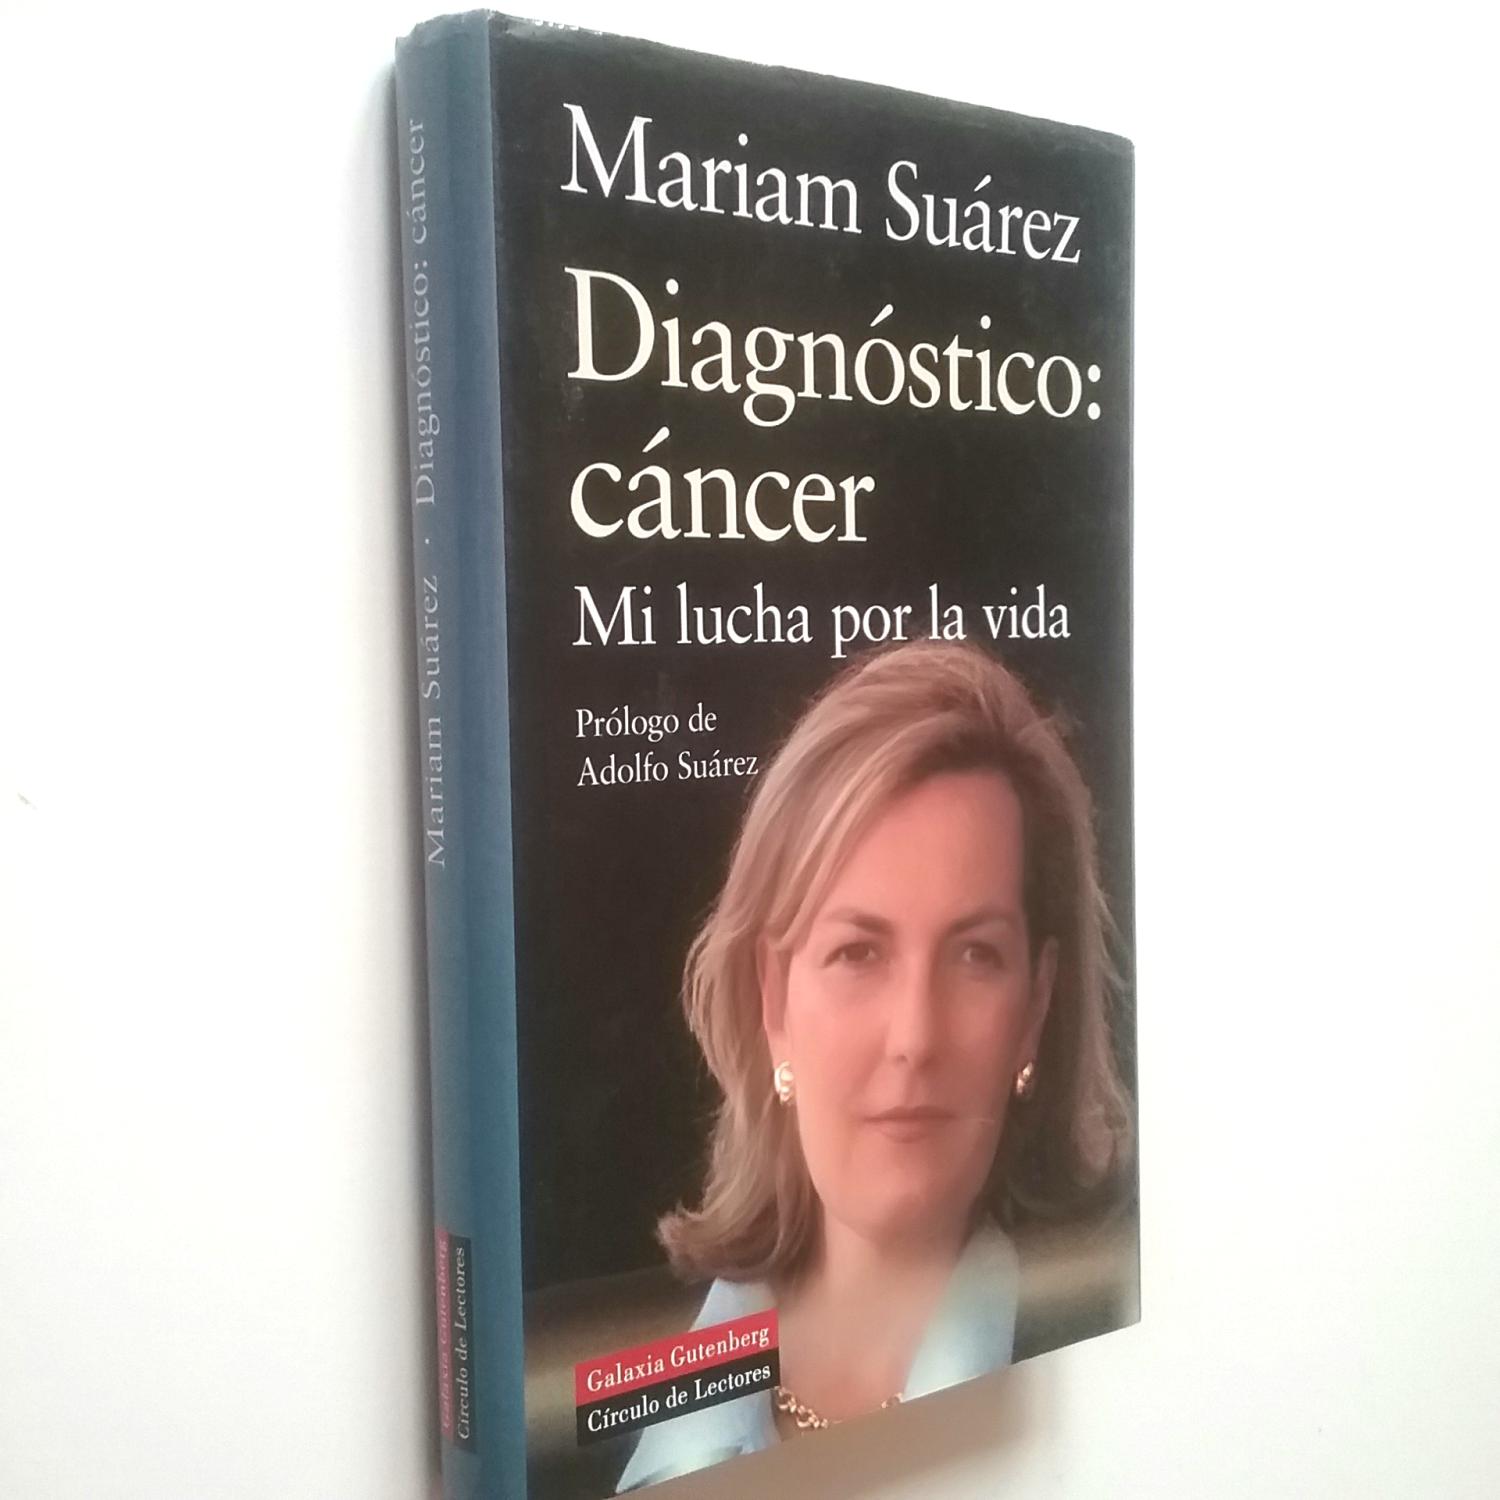 Diagnóstico cáncer. Mi lucha por la vida - Mariam Suárez (Prólogo de Adolfo Suárez)